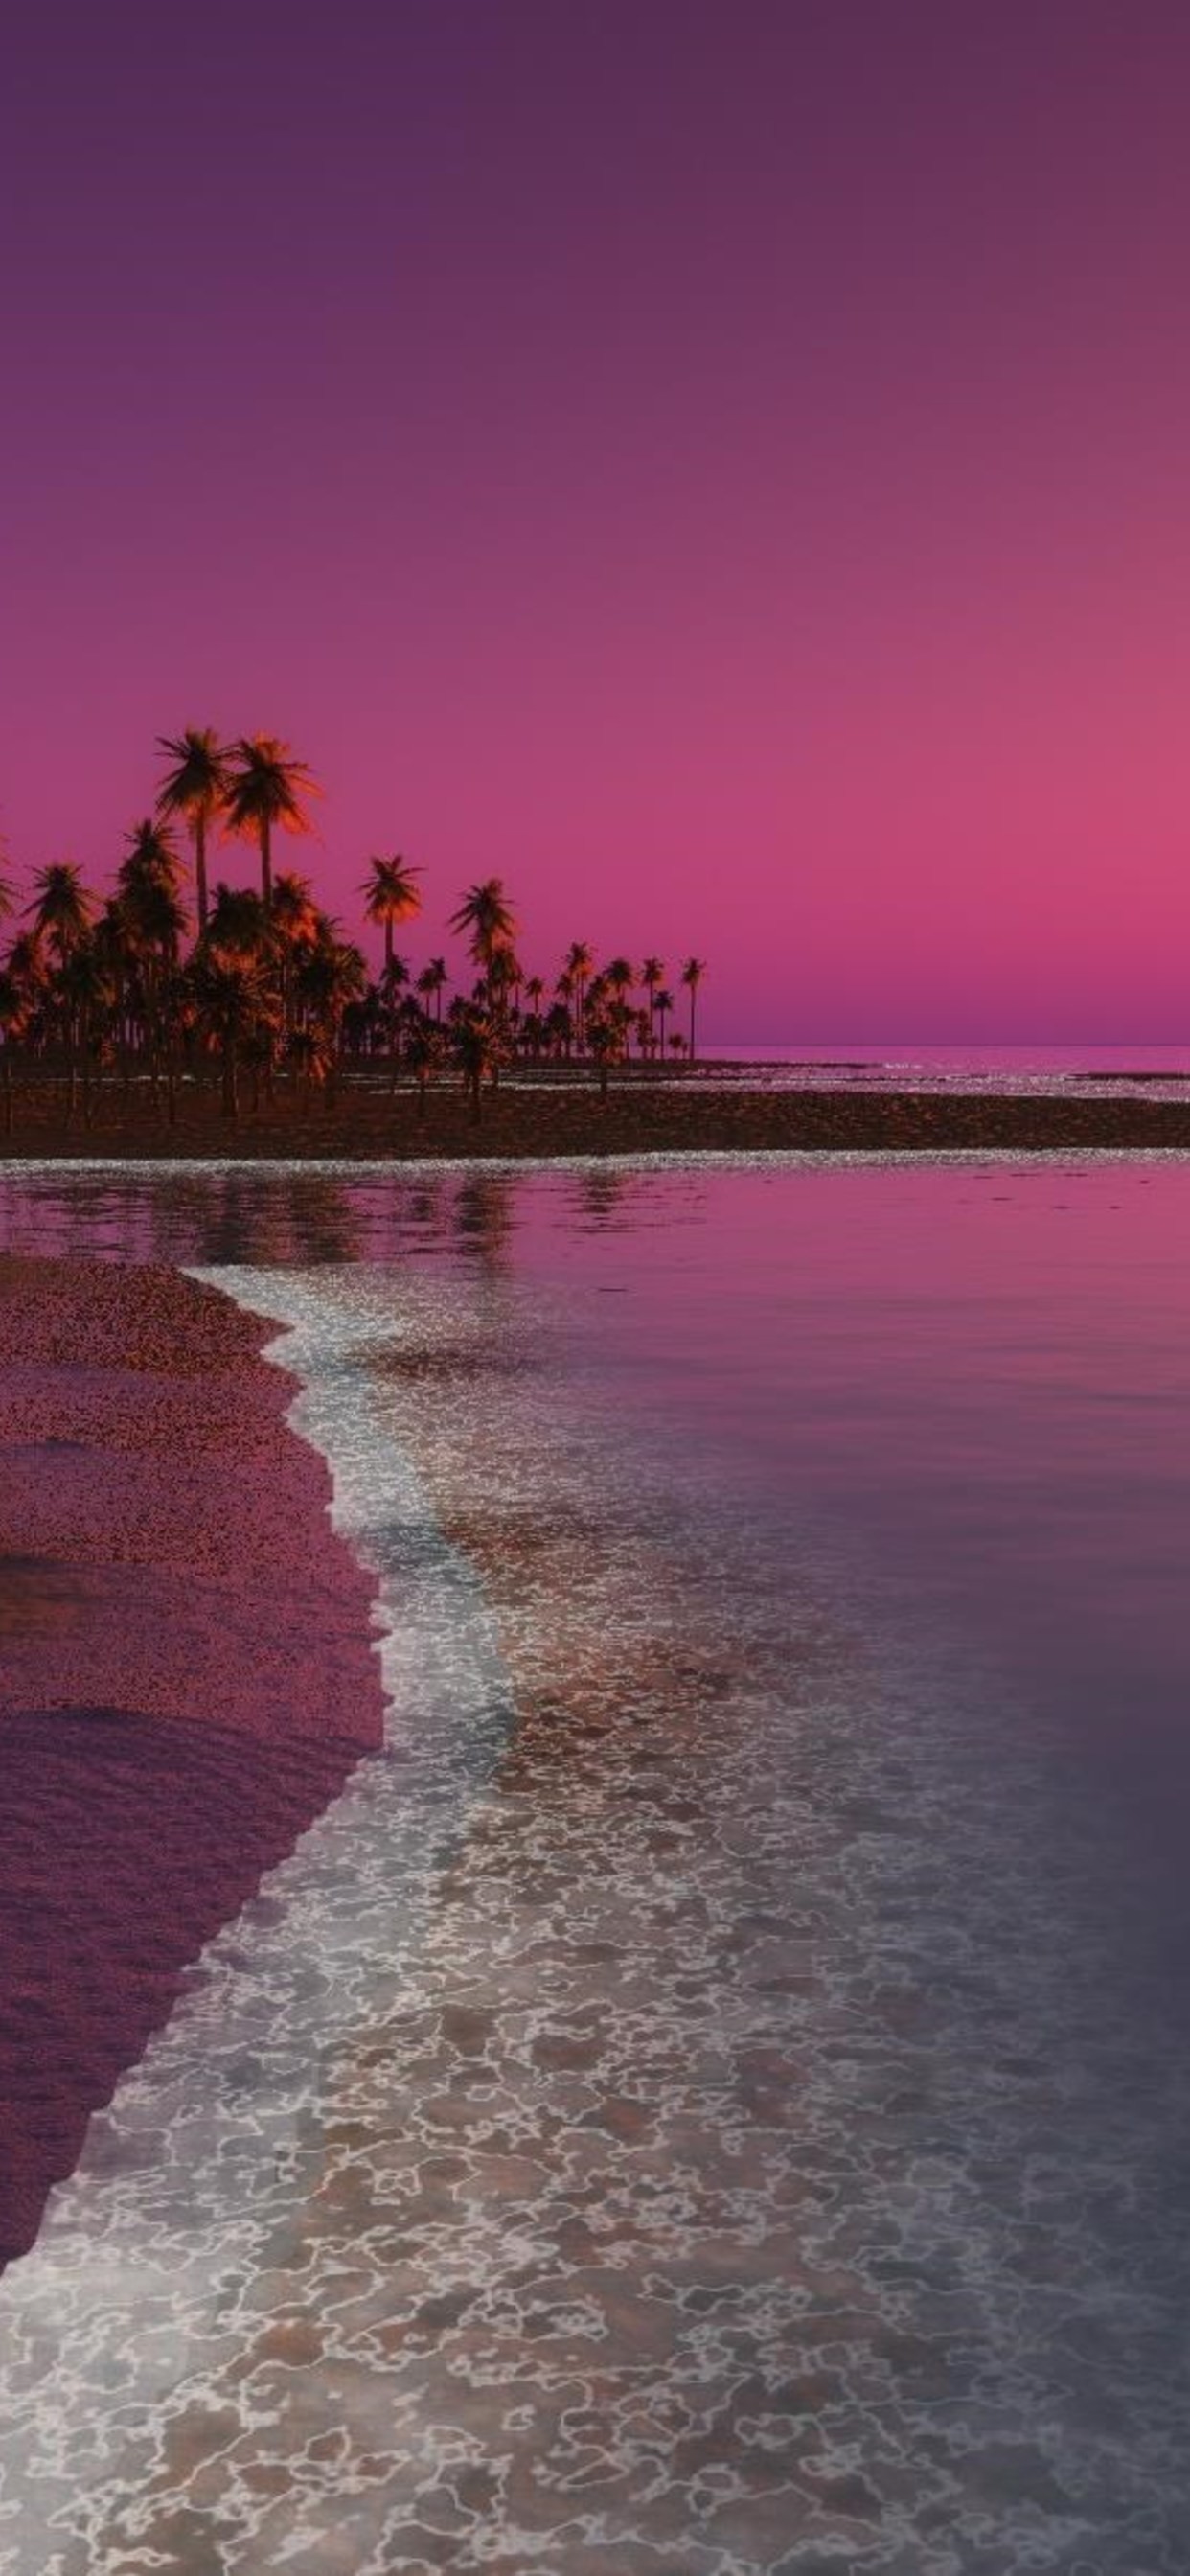 Aesthetic Pink Sunset Beach - Largest Wallpaper Portal